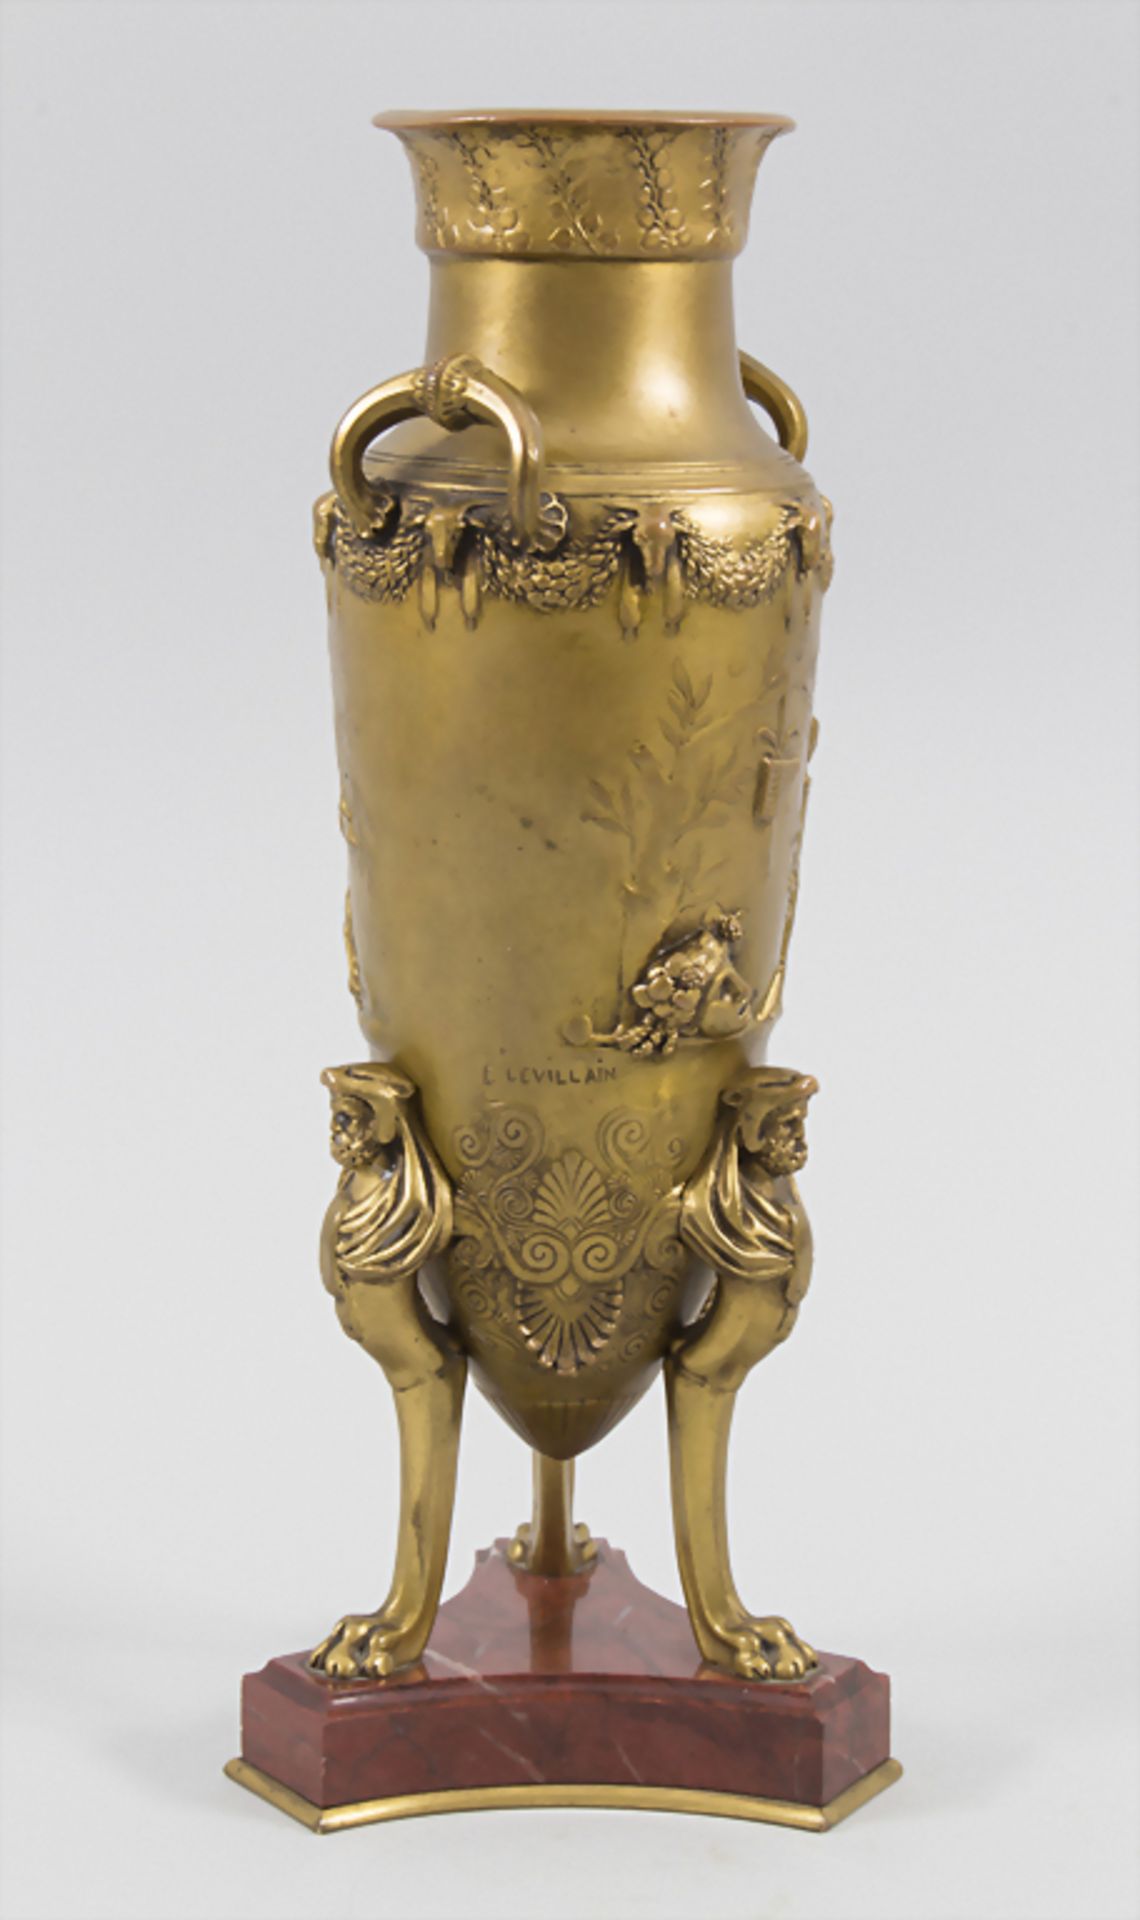 Ferdinand LEVILLAIN (1837-1905), 'Amphorenvase' / 'An amphora vase' - Image 6 of 9